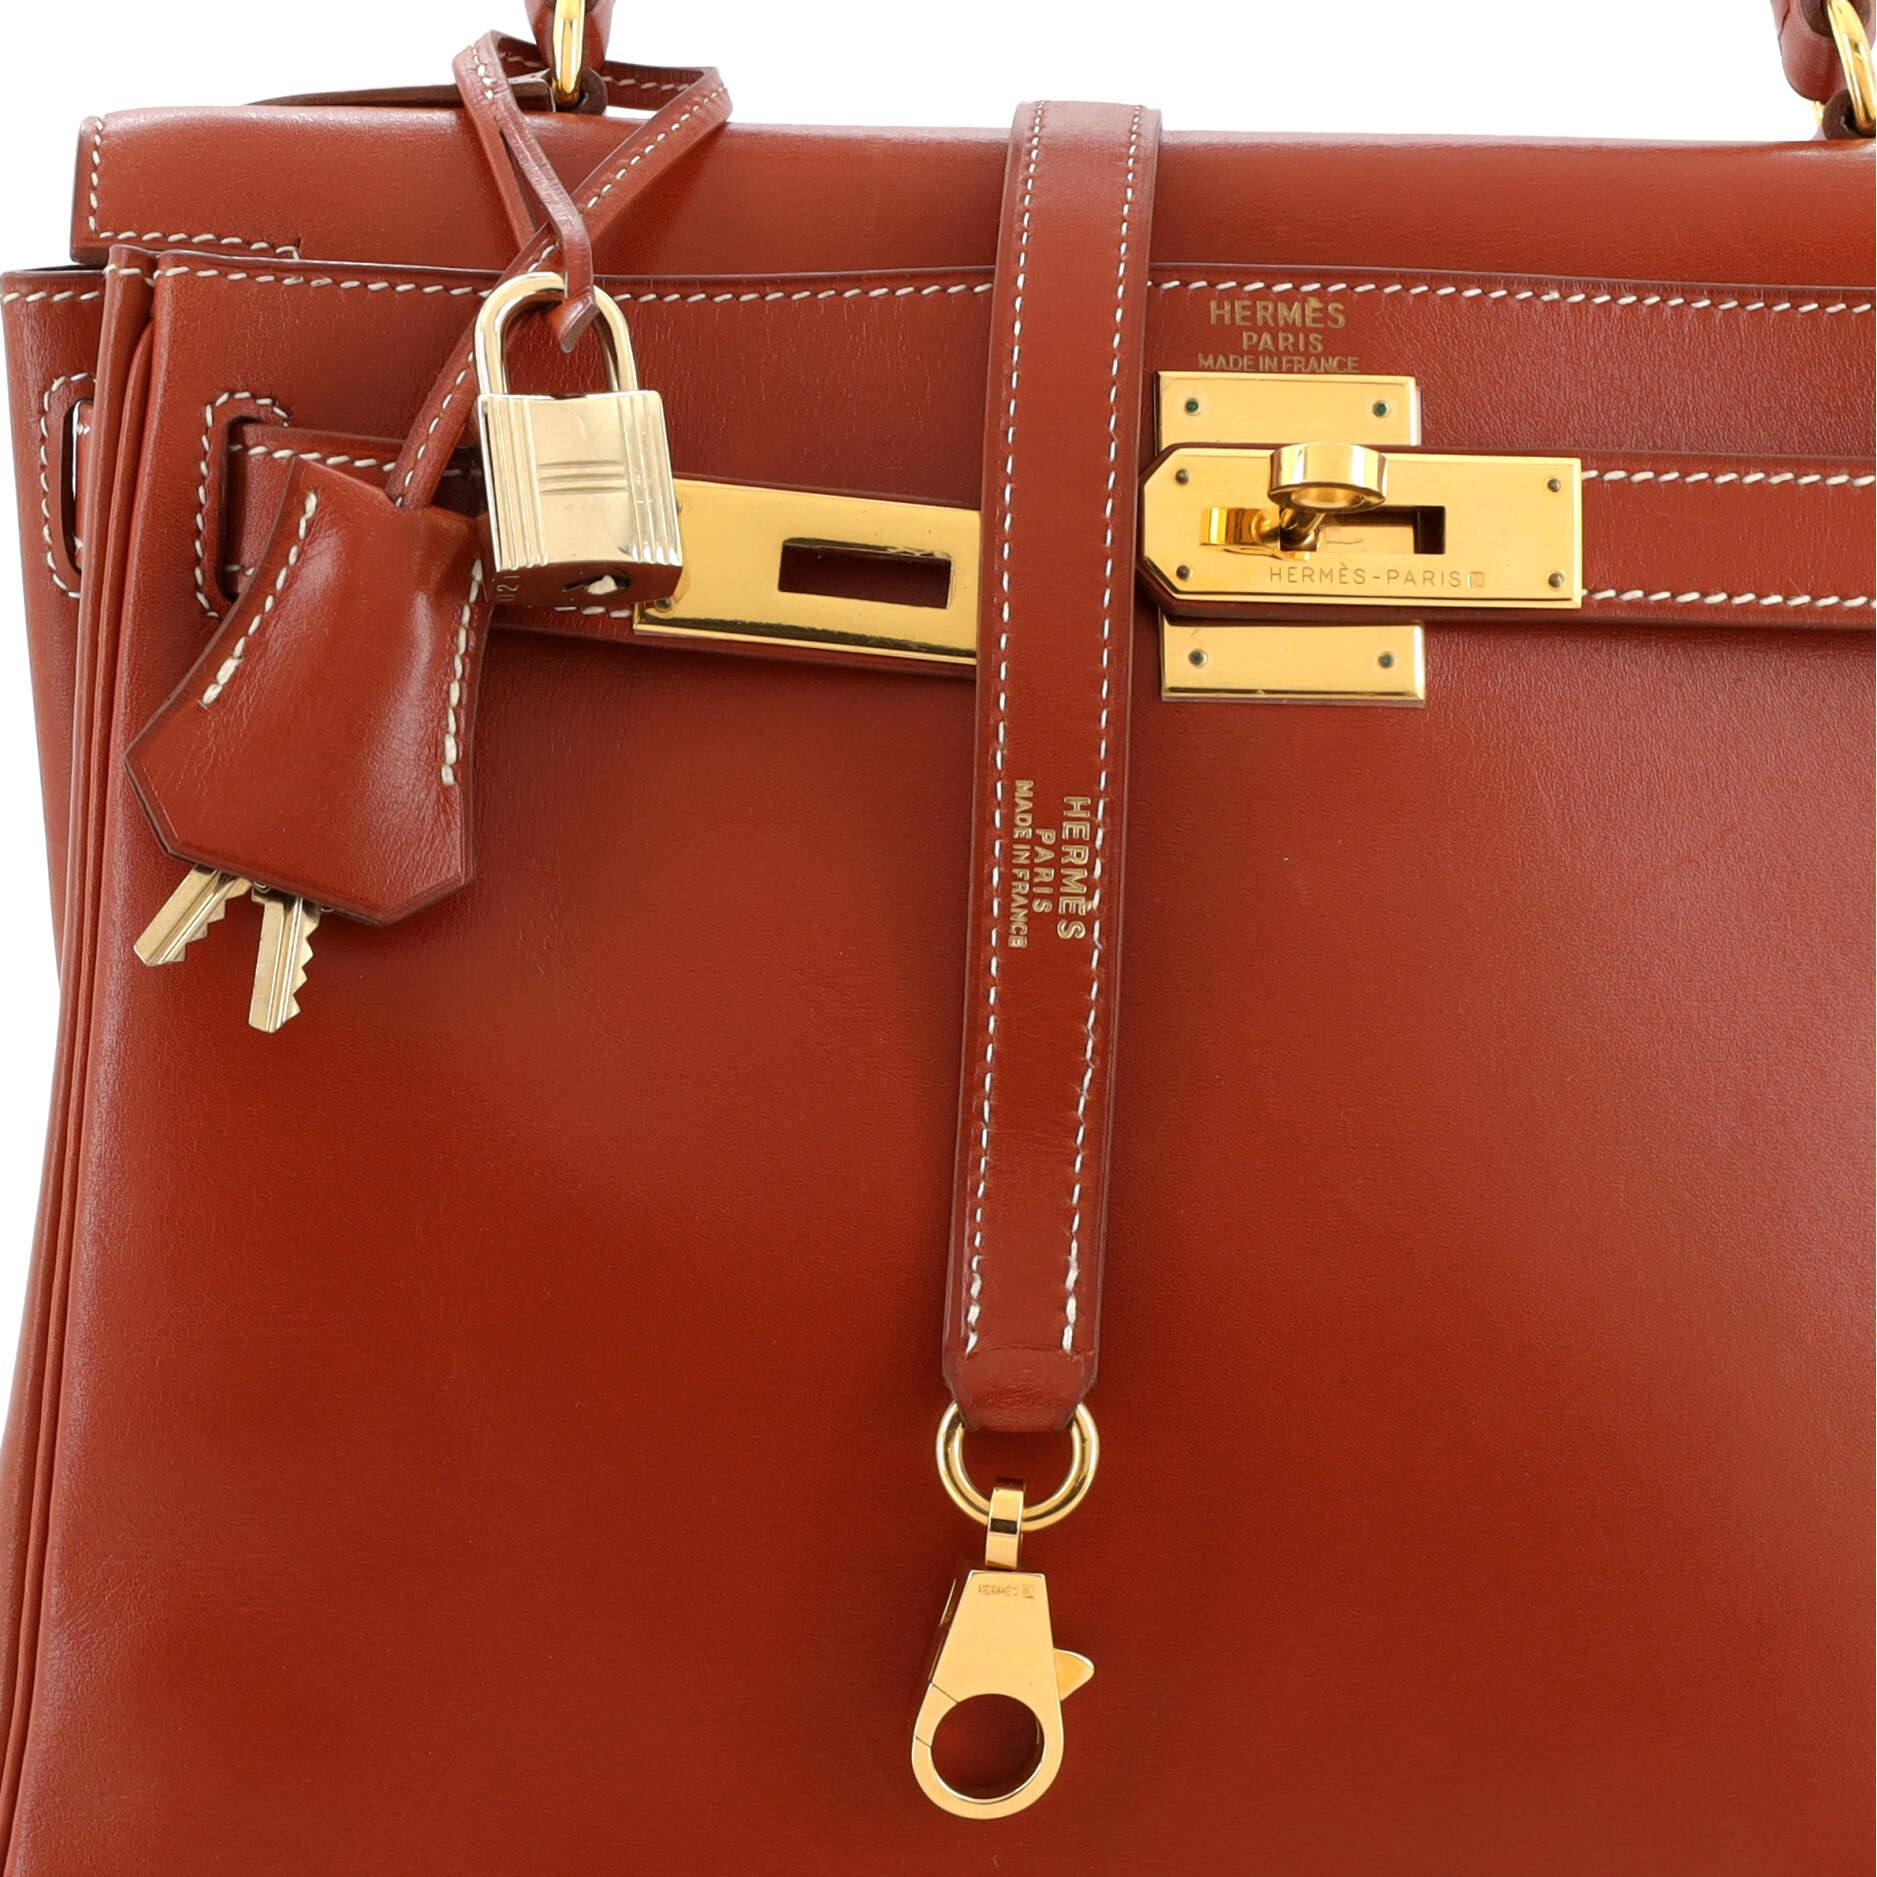 Hermes Kelly Handbag Brique Box Calf with Gold Hardware 28 3